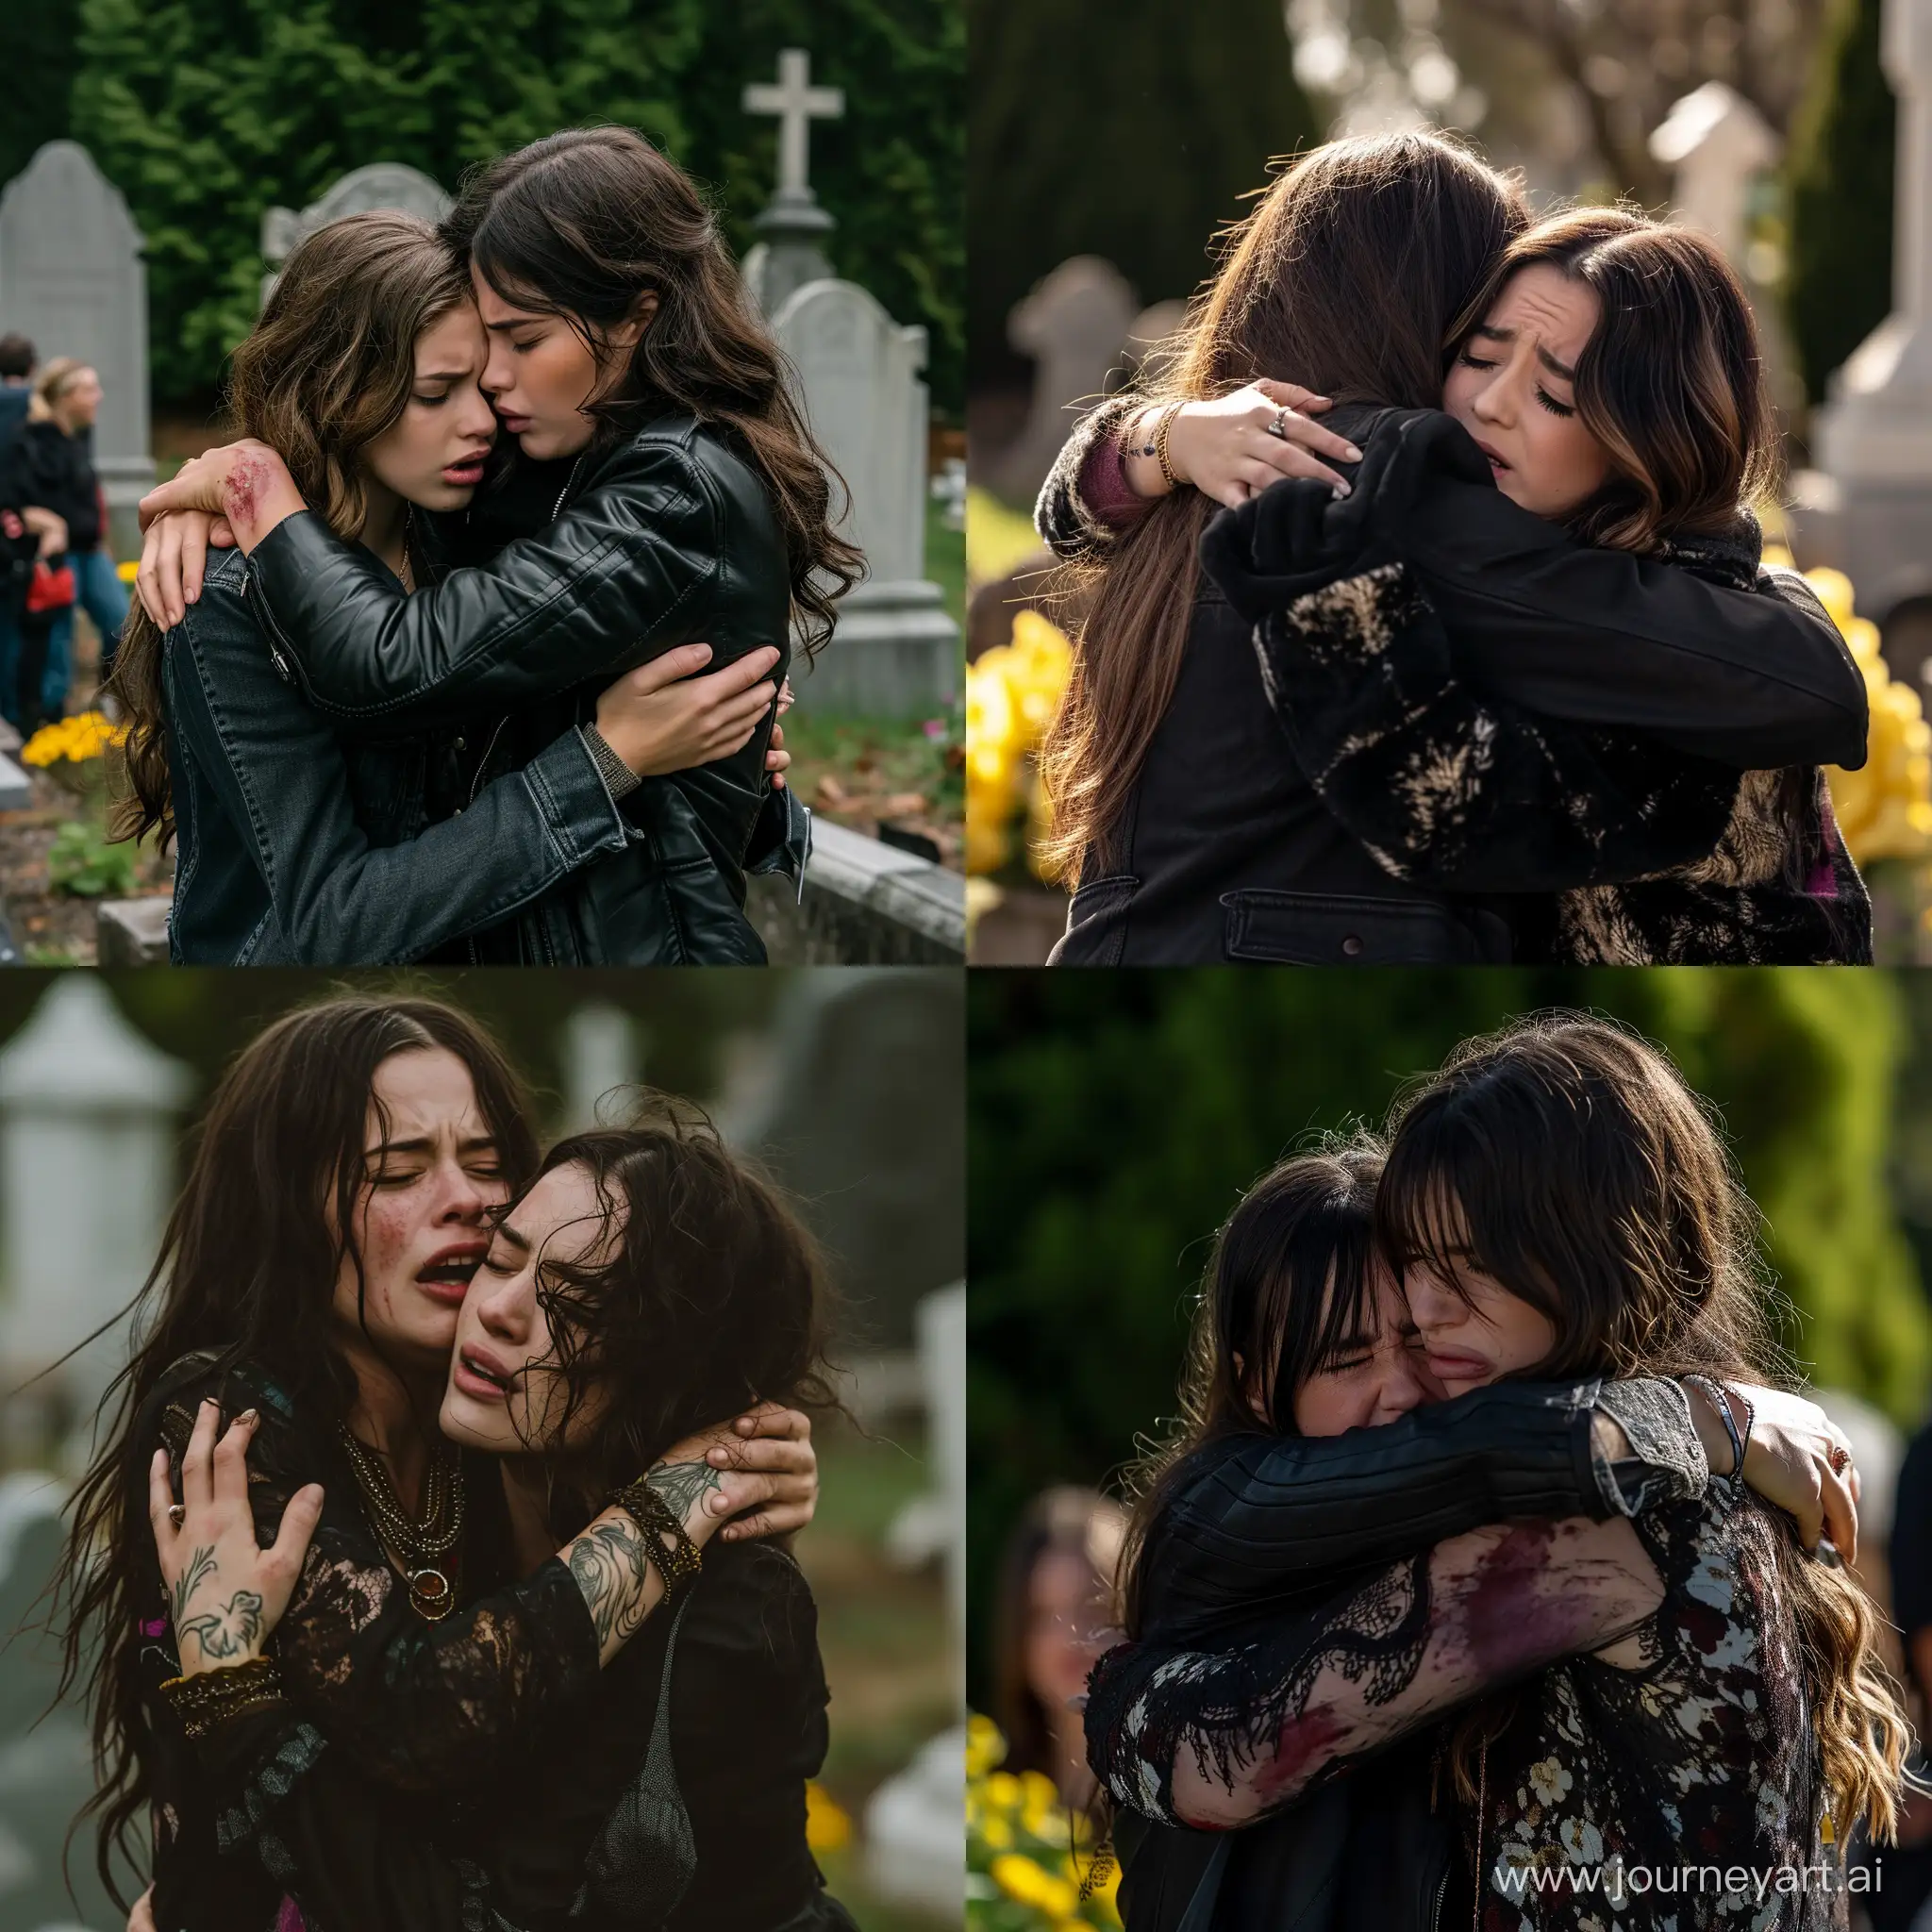 Emotional-Hug-at-Cemetery-Lesbian-Annie-LeBlanc-and-Jayden-Bertels-Comfort-Each-Other